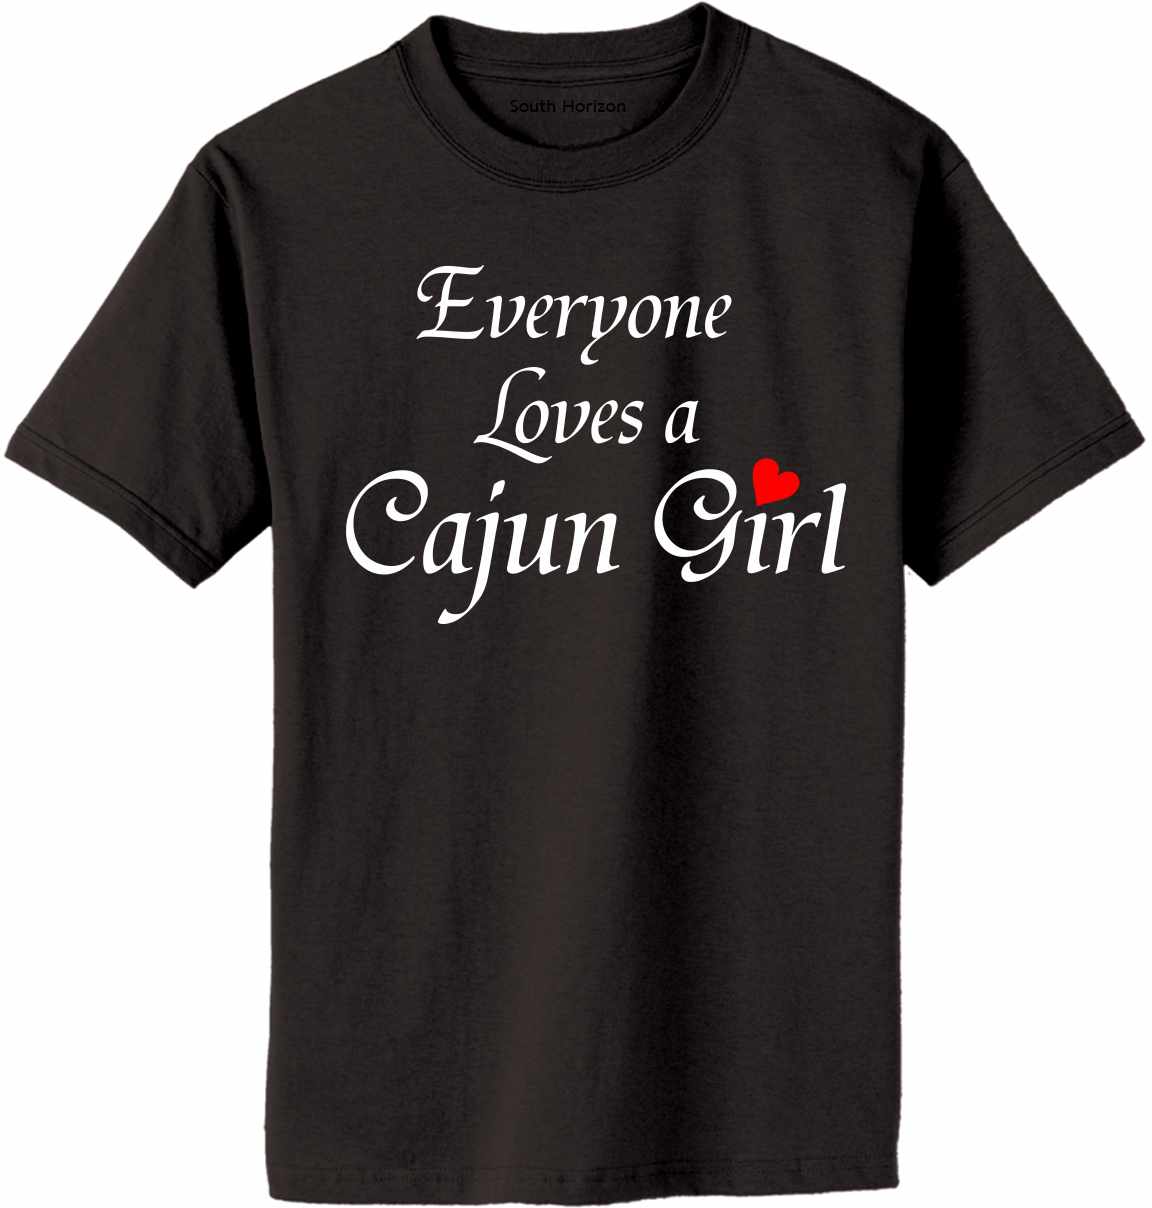 Everyone Loves A Cajun Girl Adult T-Shirt (#544-1)